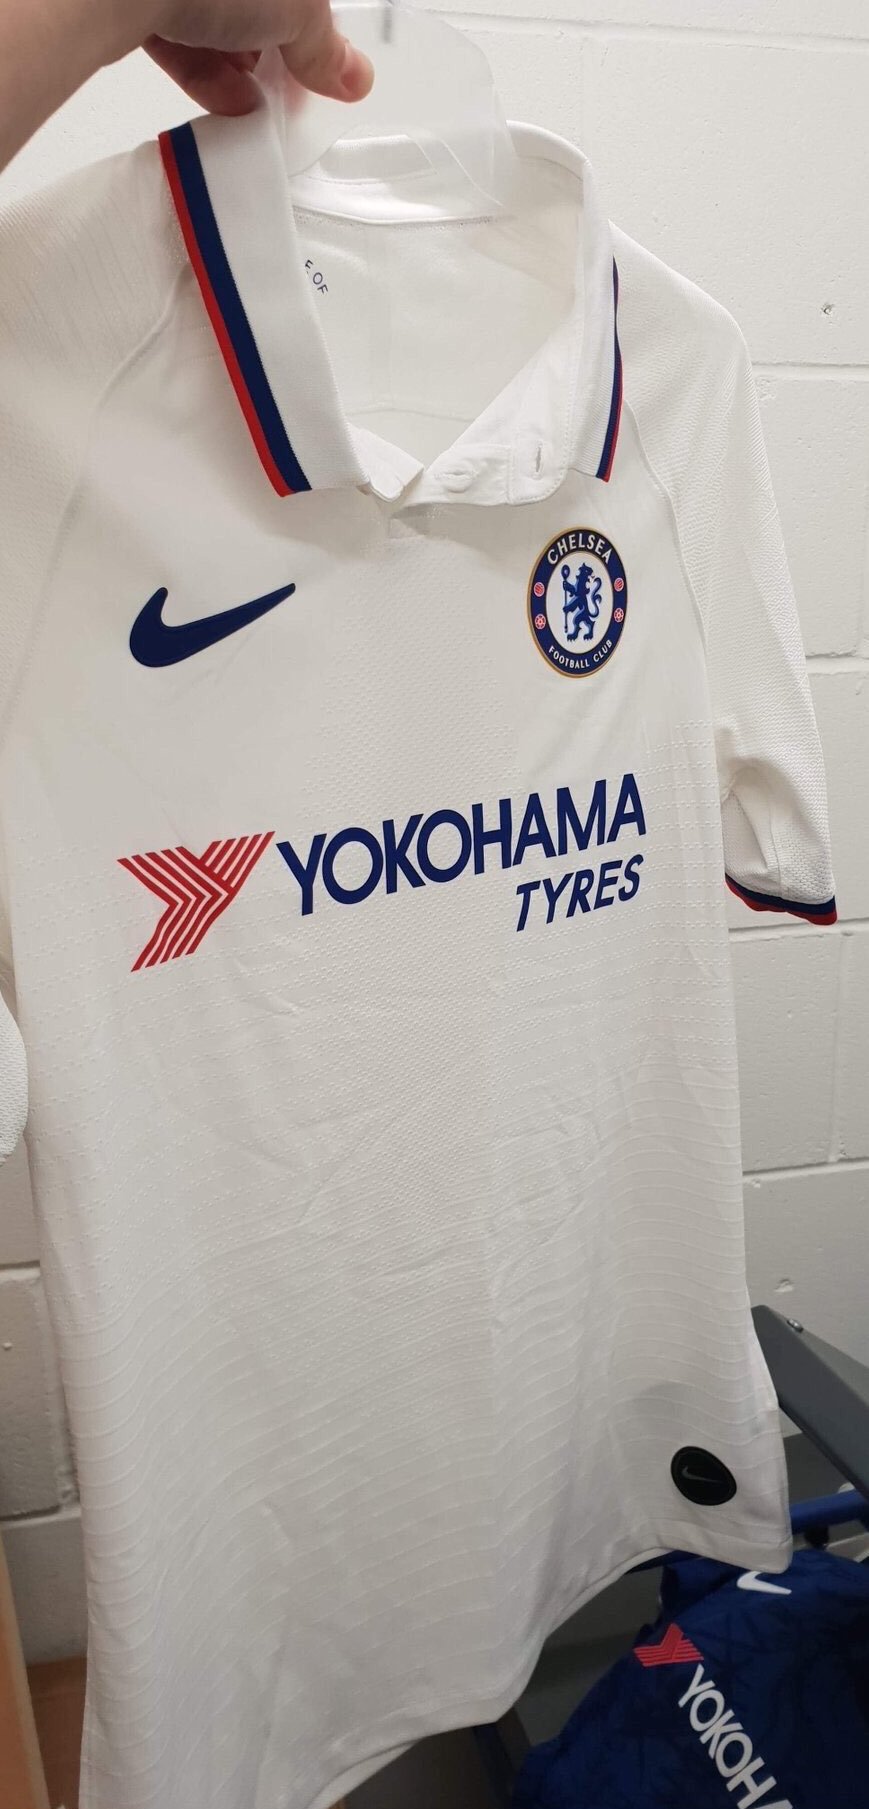 Chelsea 2020 maillot exterieur blanc Nike 19 20